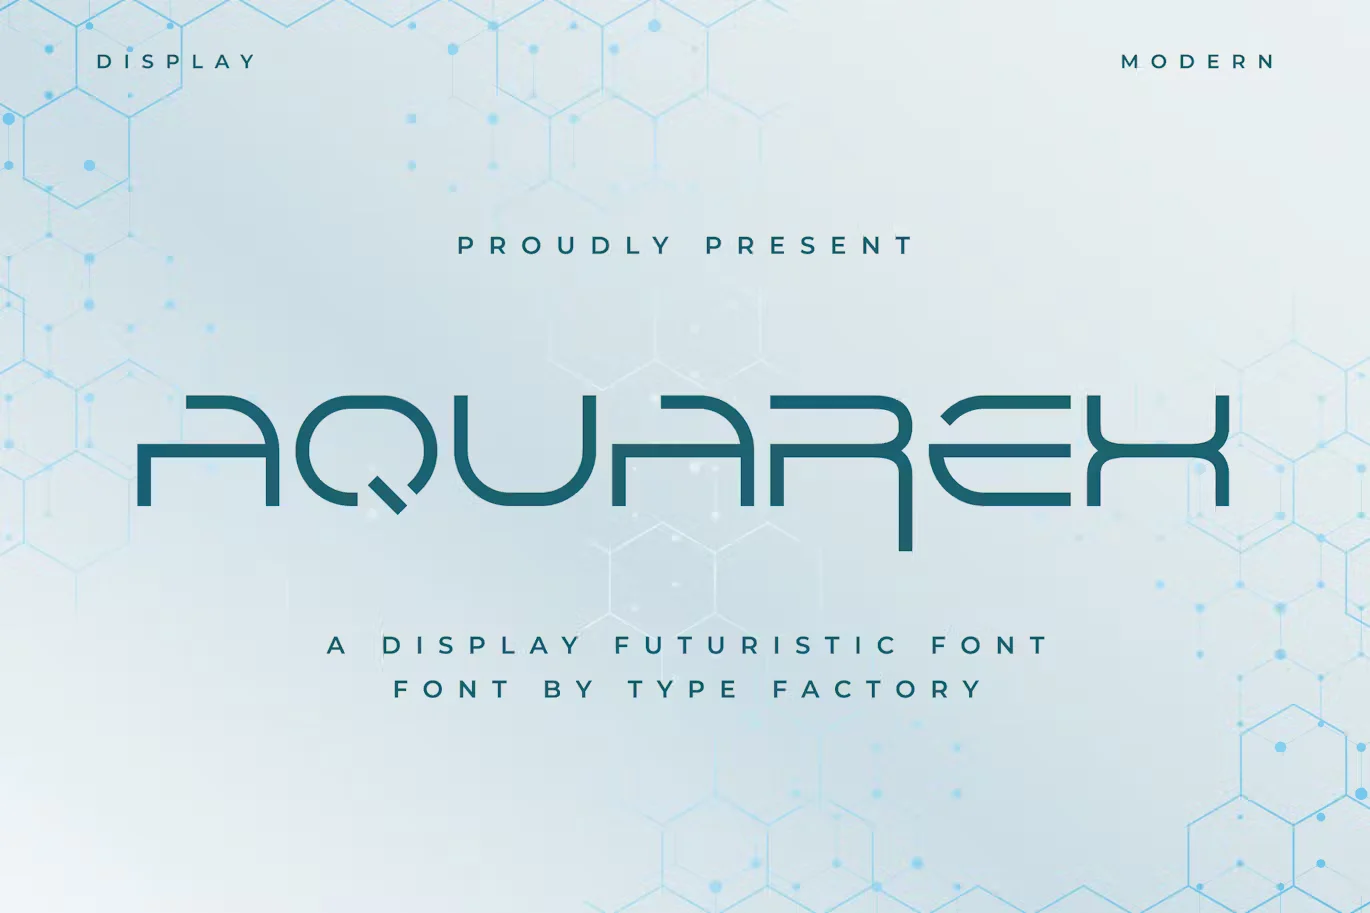 Aquarex – A Display Futuristic Font